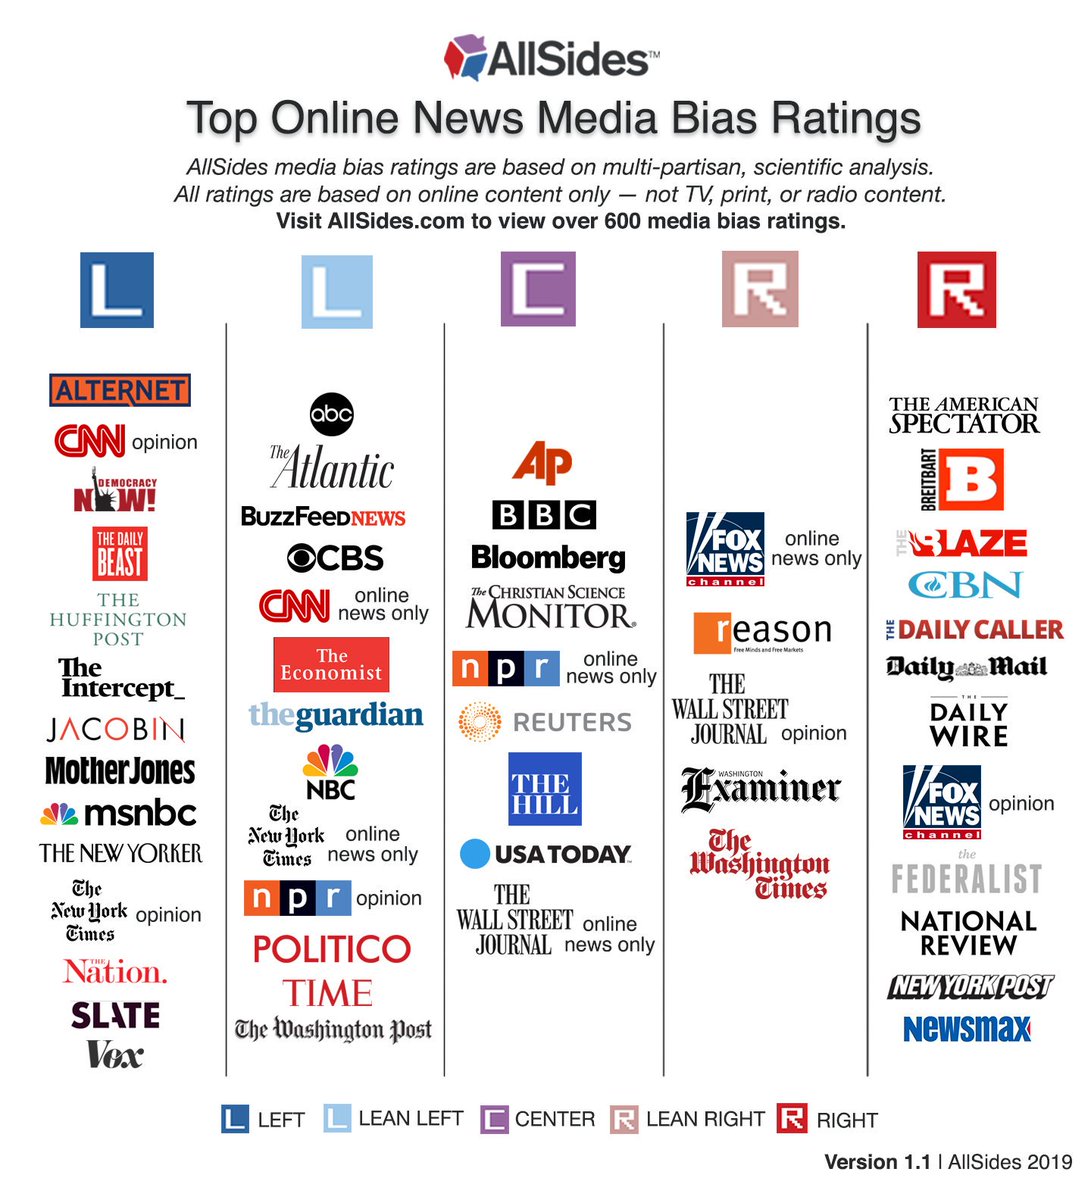 Sharyl Attkisson Media Chart